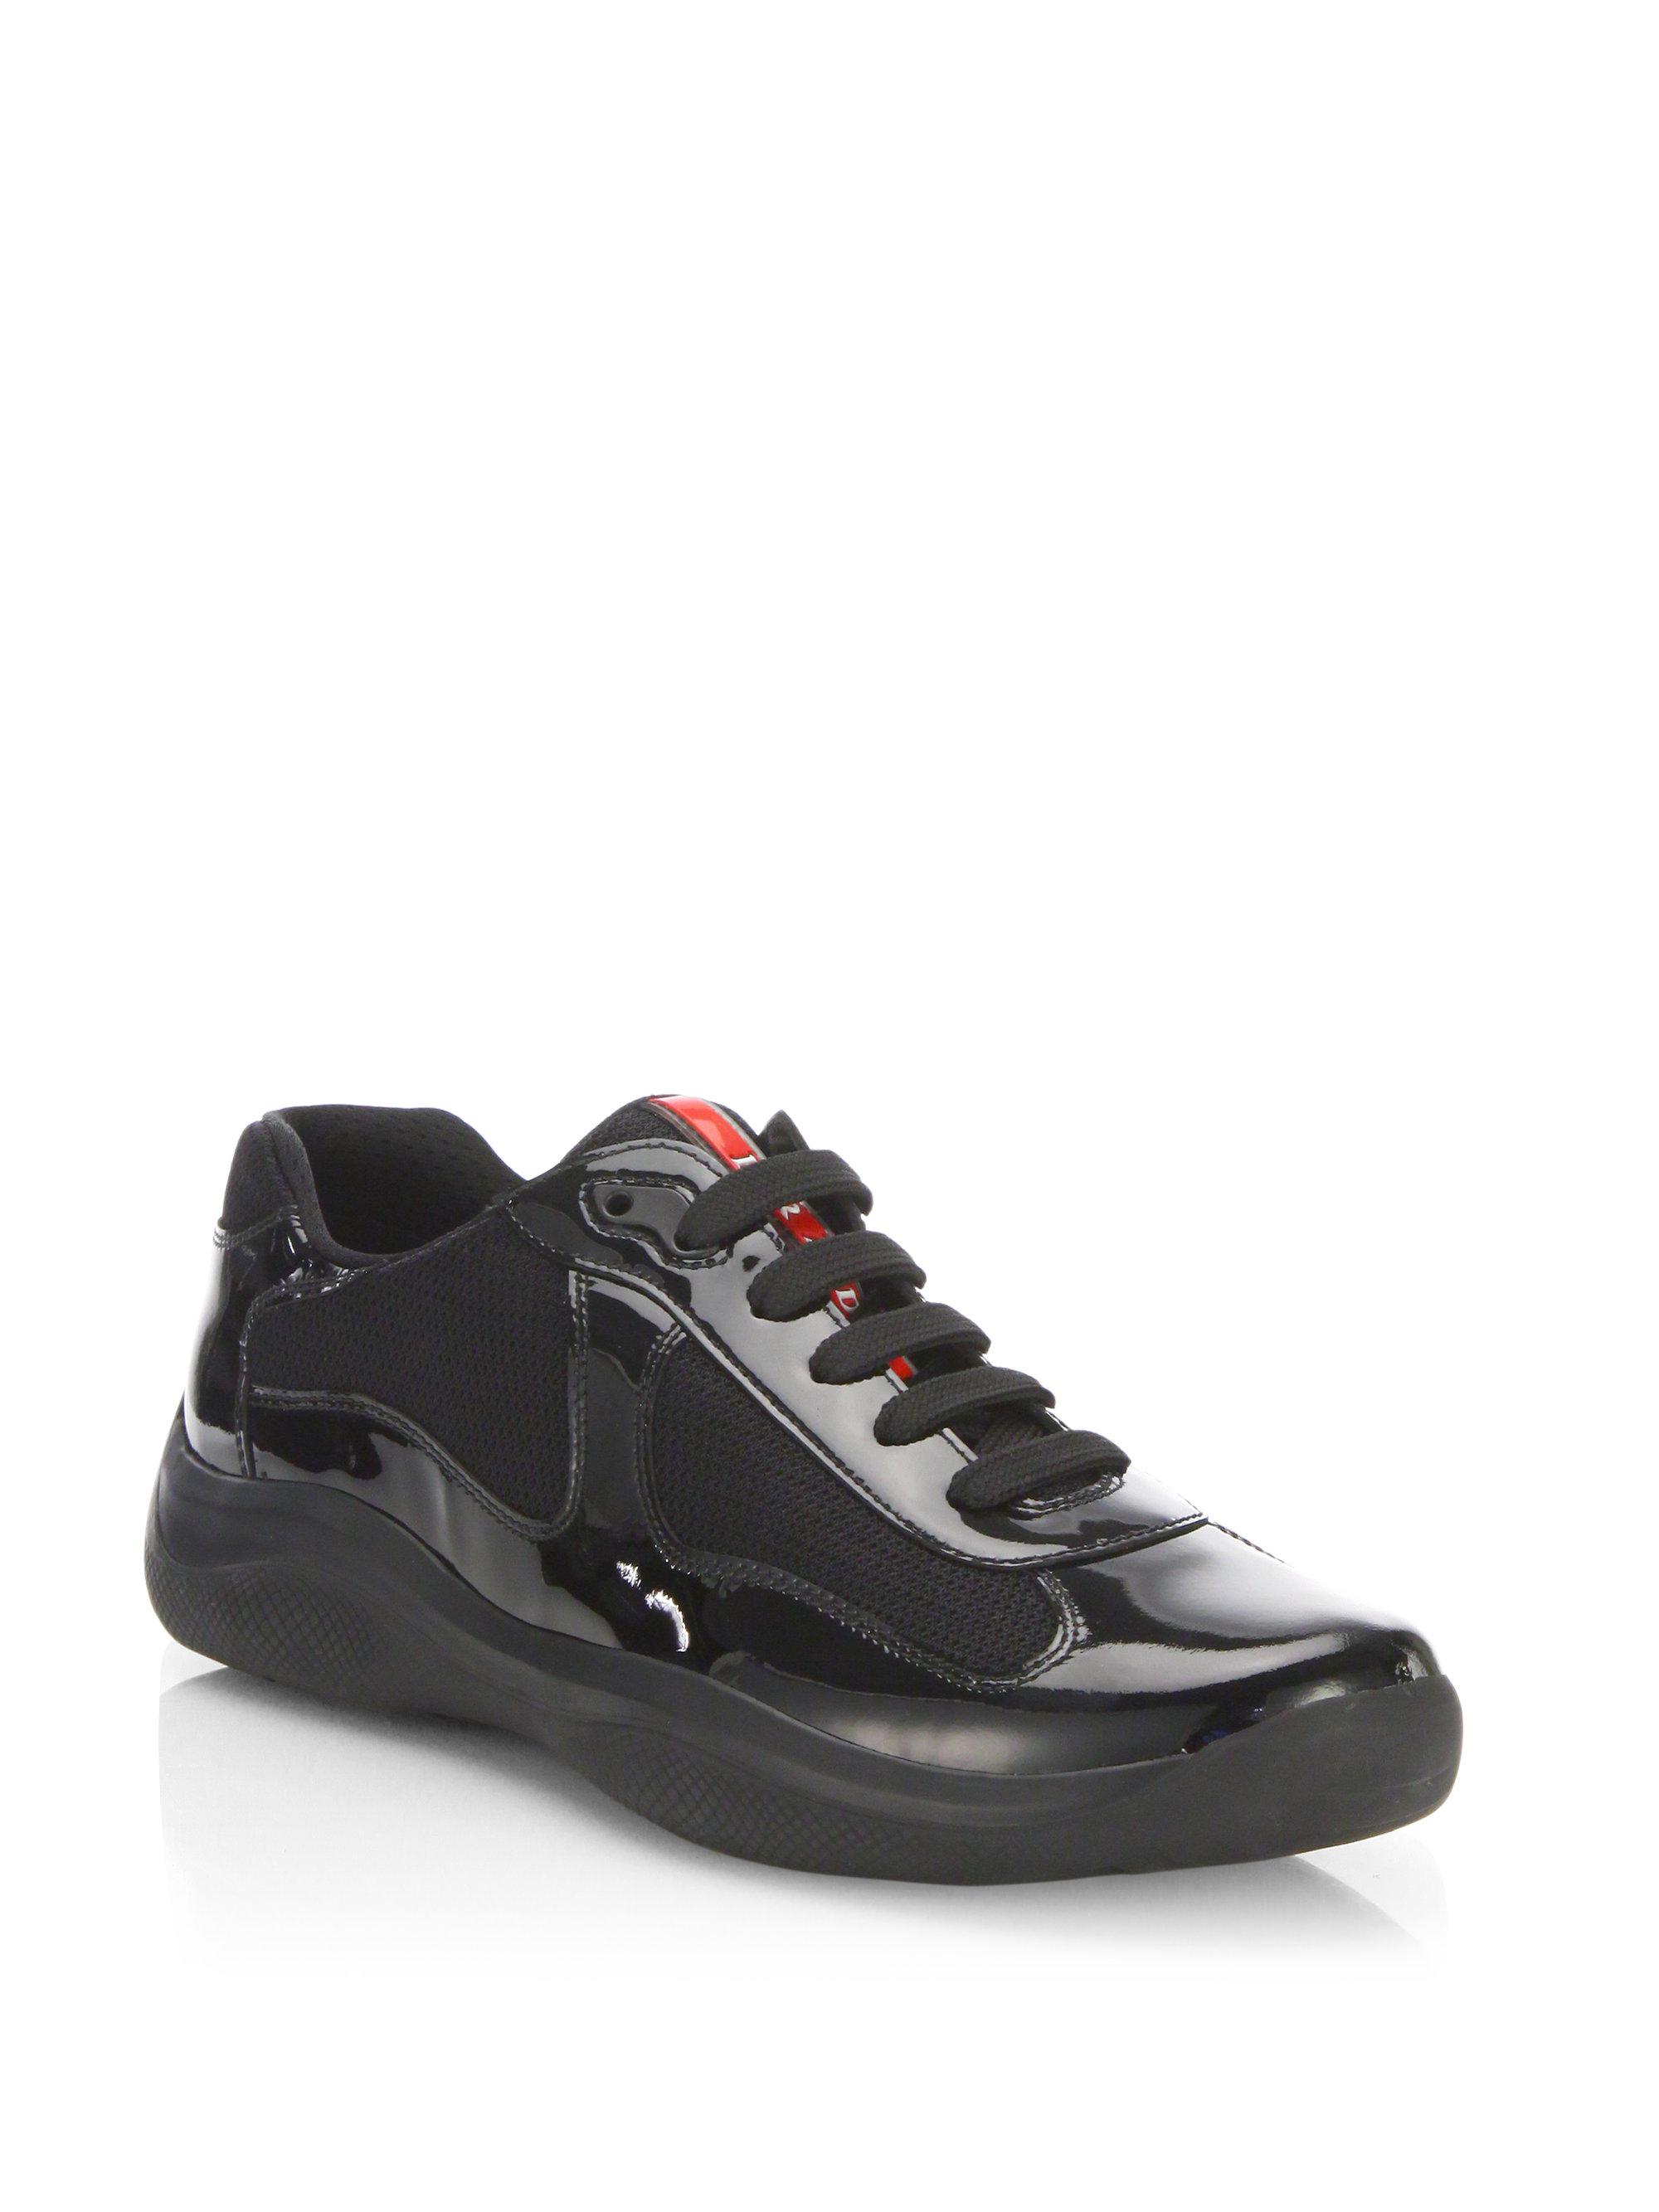 Prada Newac Patent Leather Sneakers in Black for Men